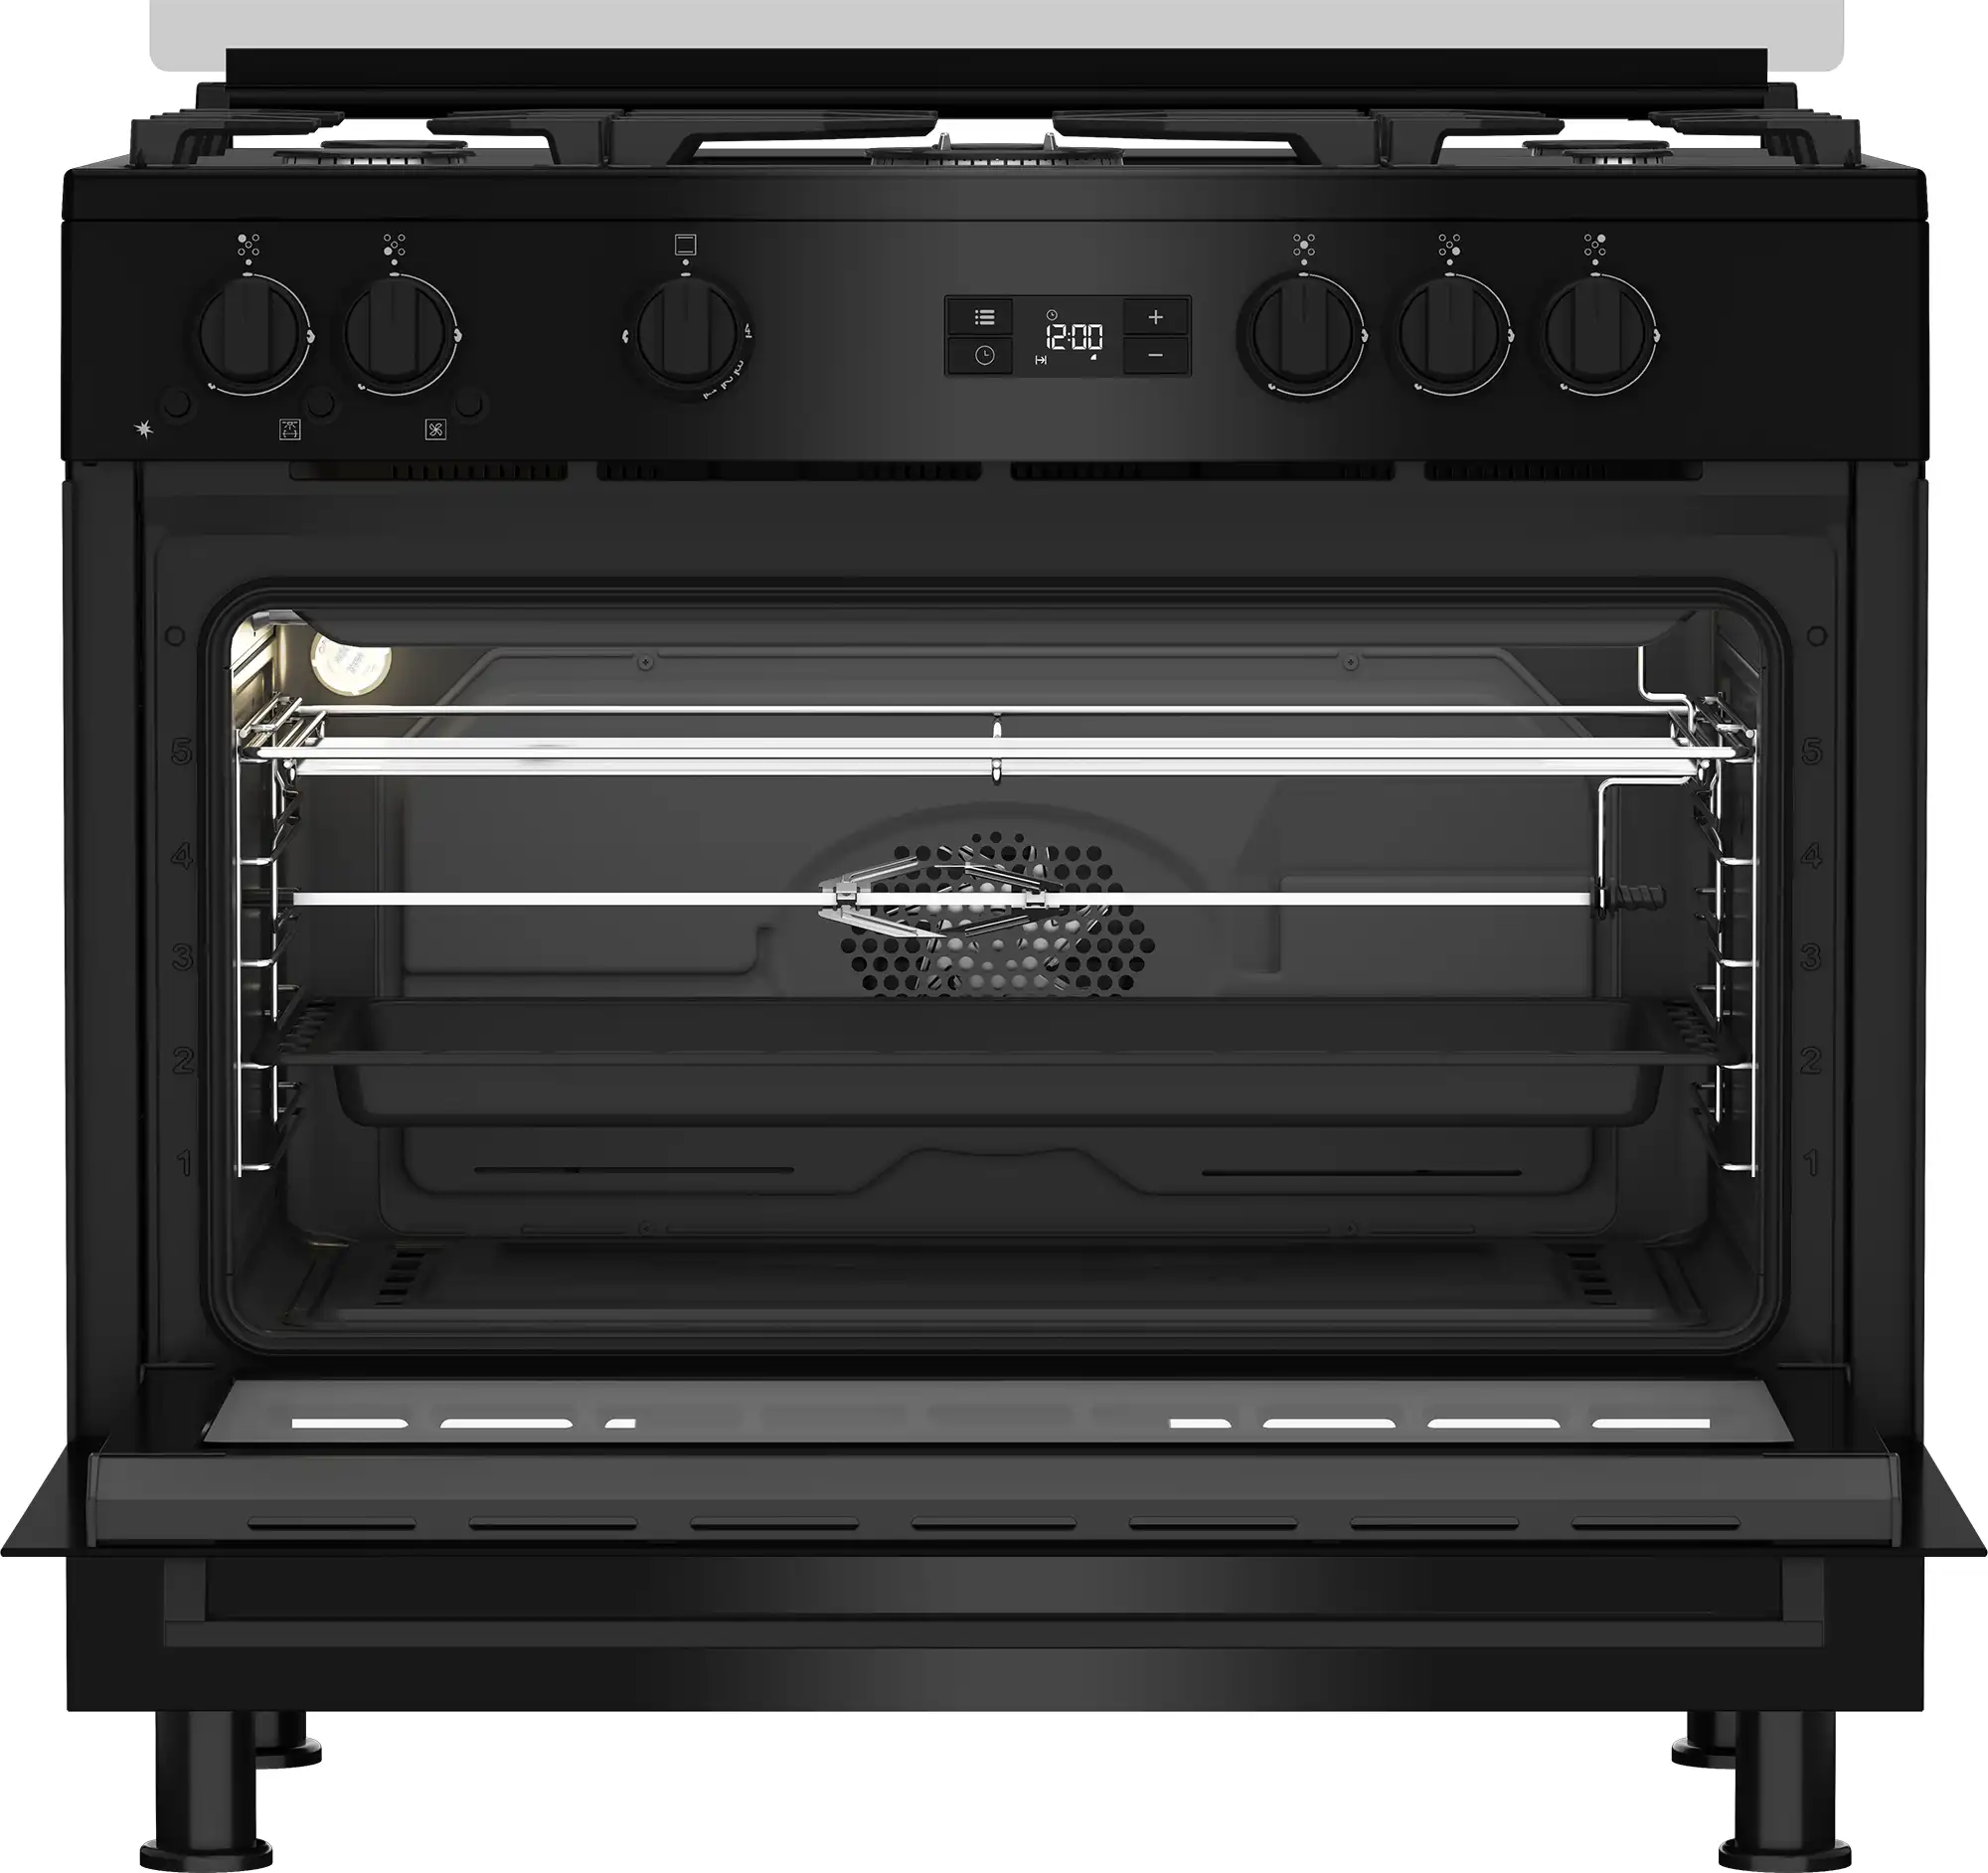 Beko gas cooker, 90 x 60 cm, 5 burners, full safety, digital screen, fan, black, GGR 15325 FX NB